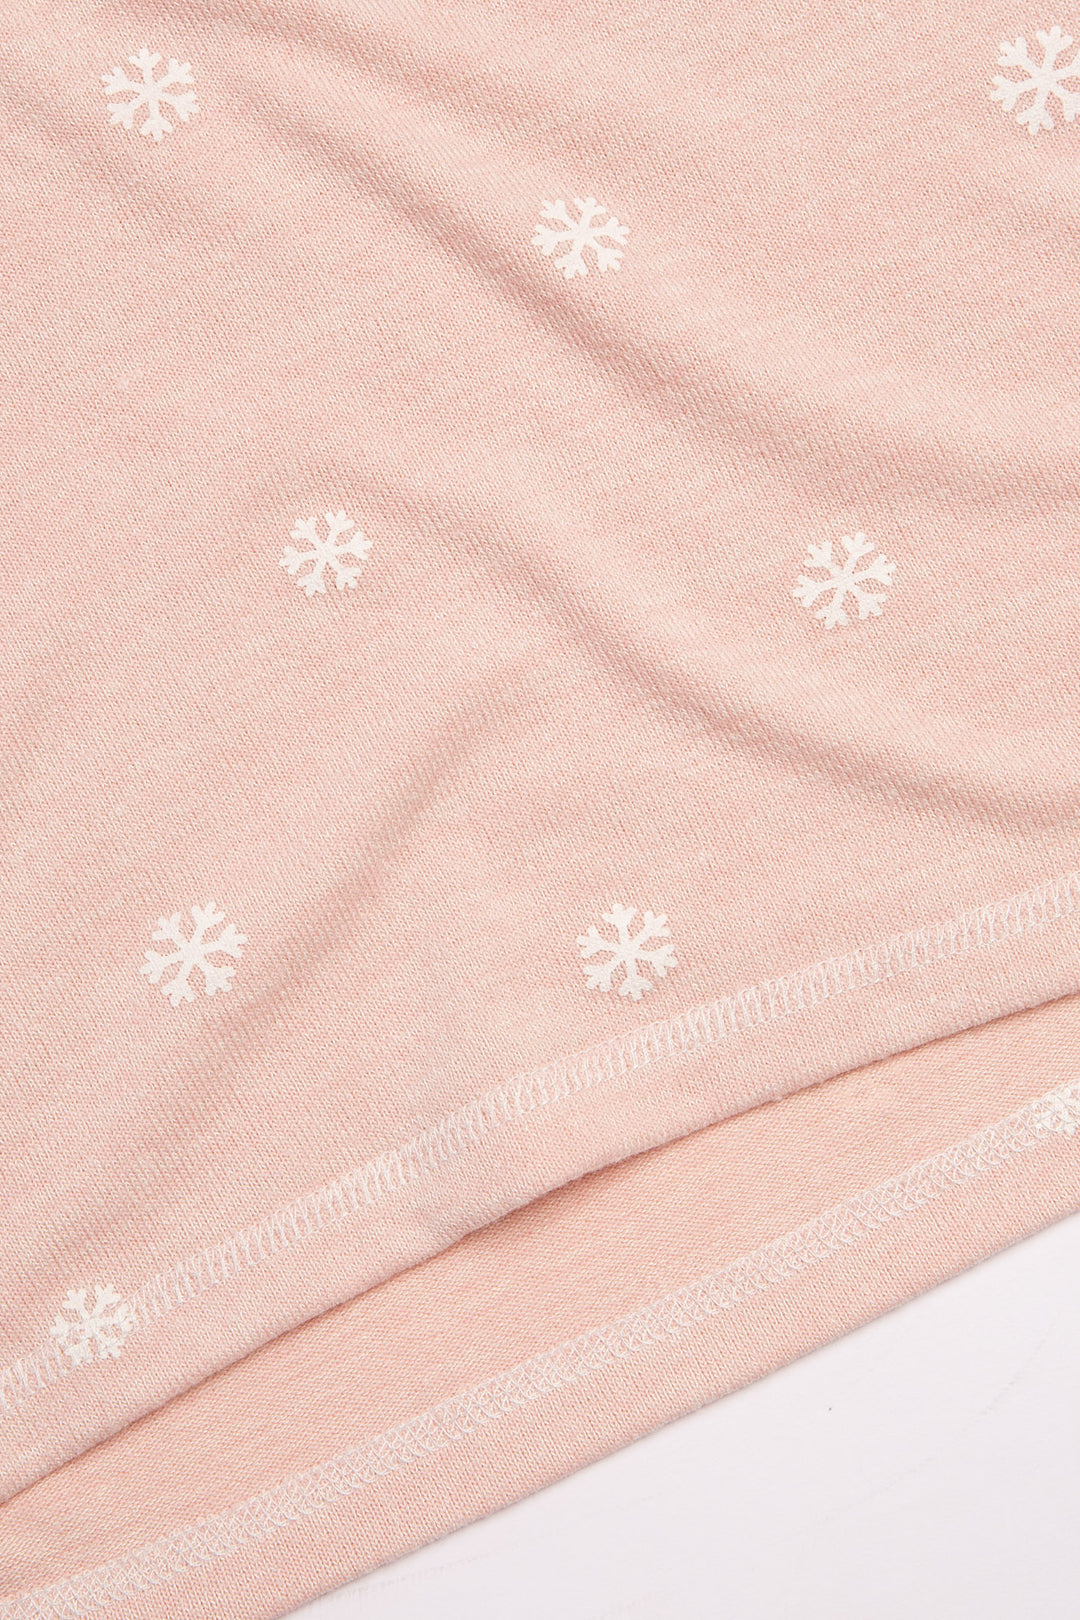 Shop Printed Sheet Set Pink/Grey Snowflakes